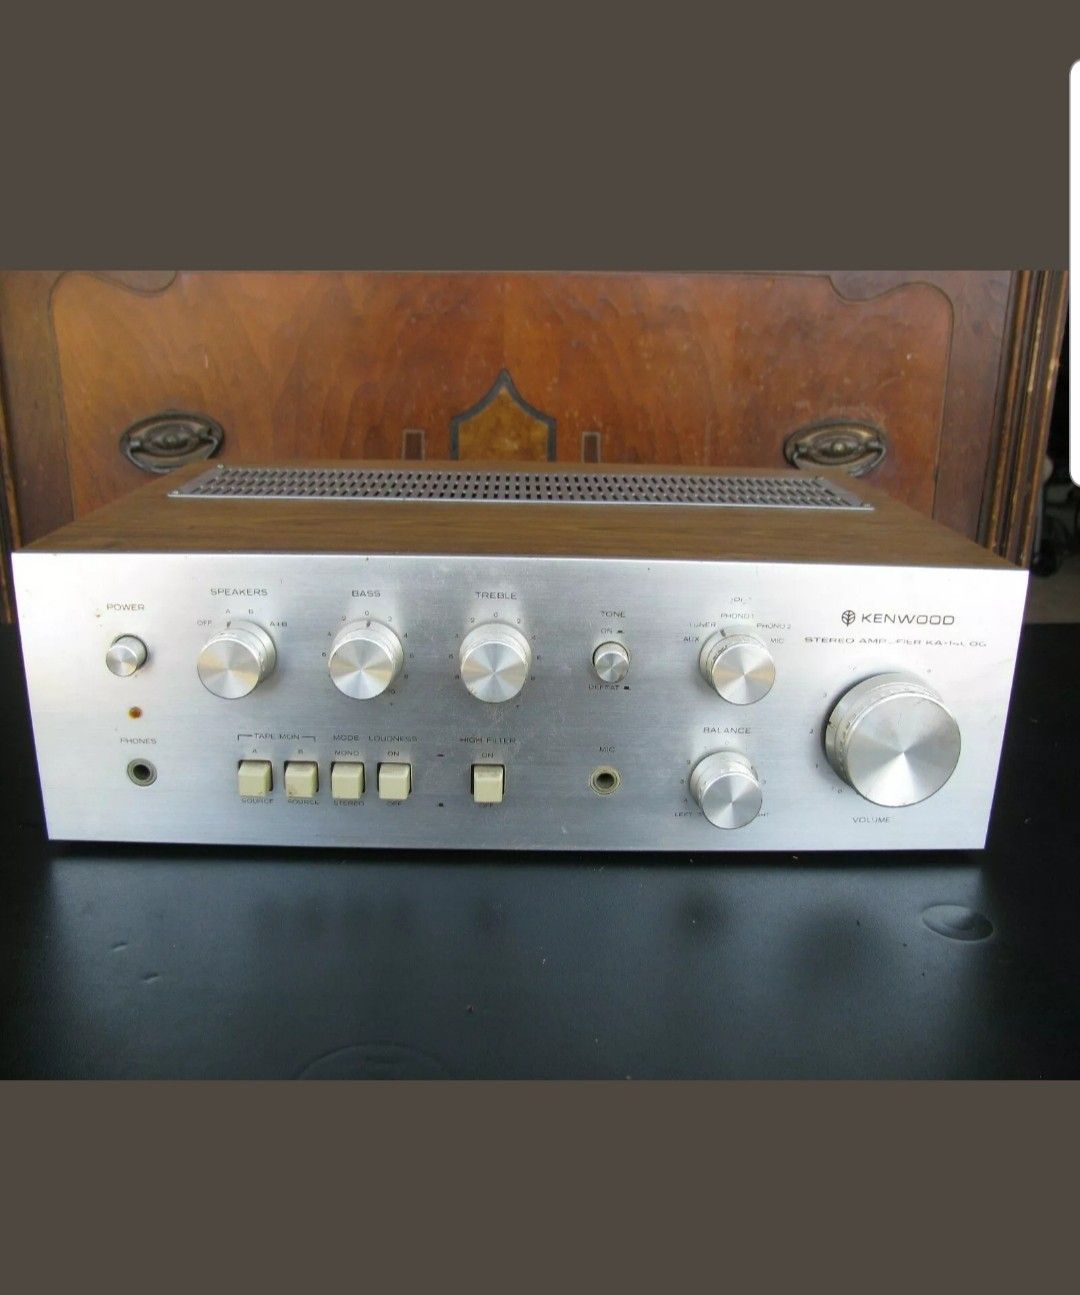 Vintage Kenwood amplifier KA-1400G